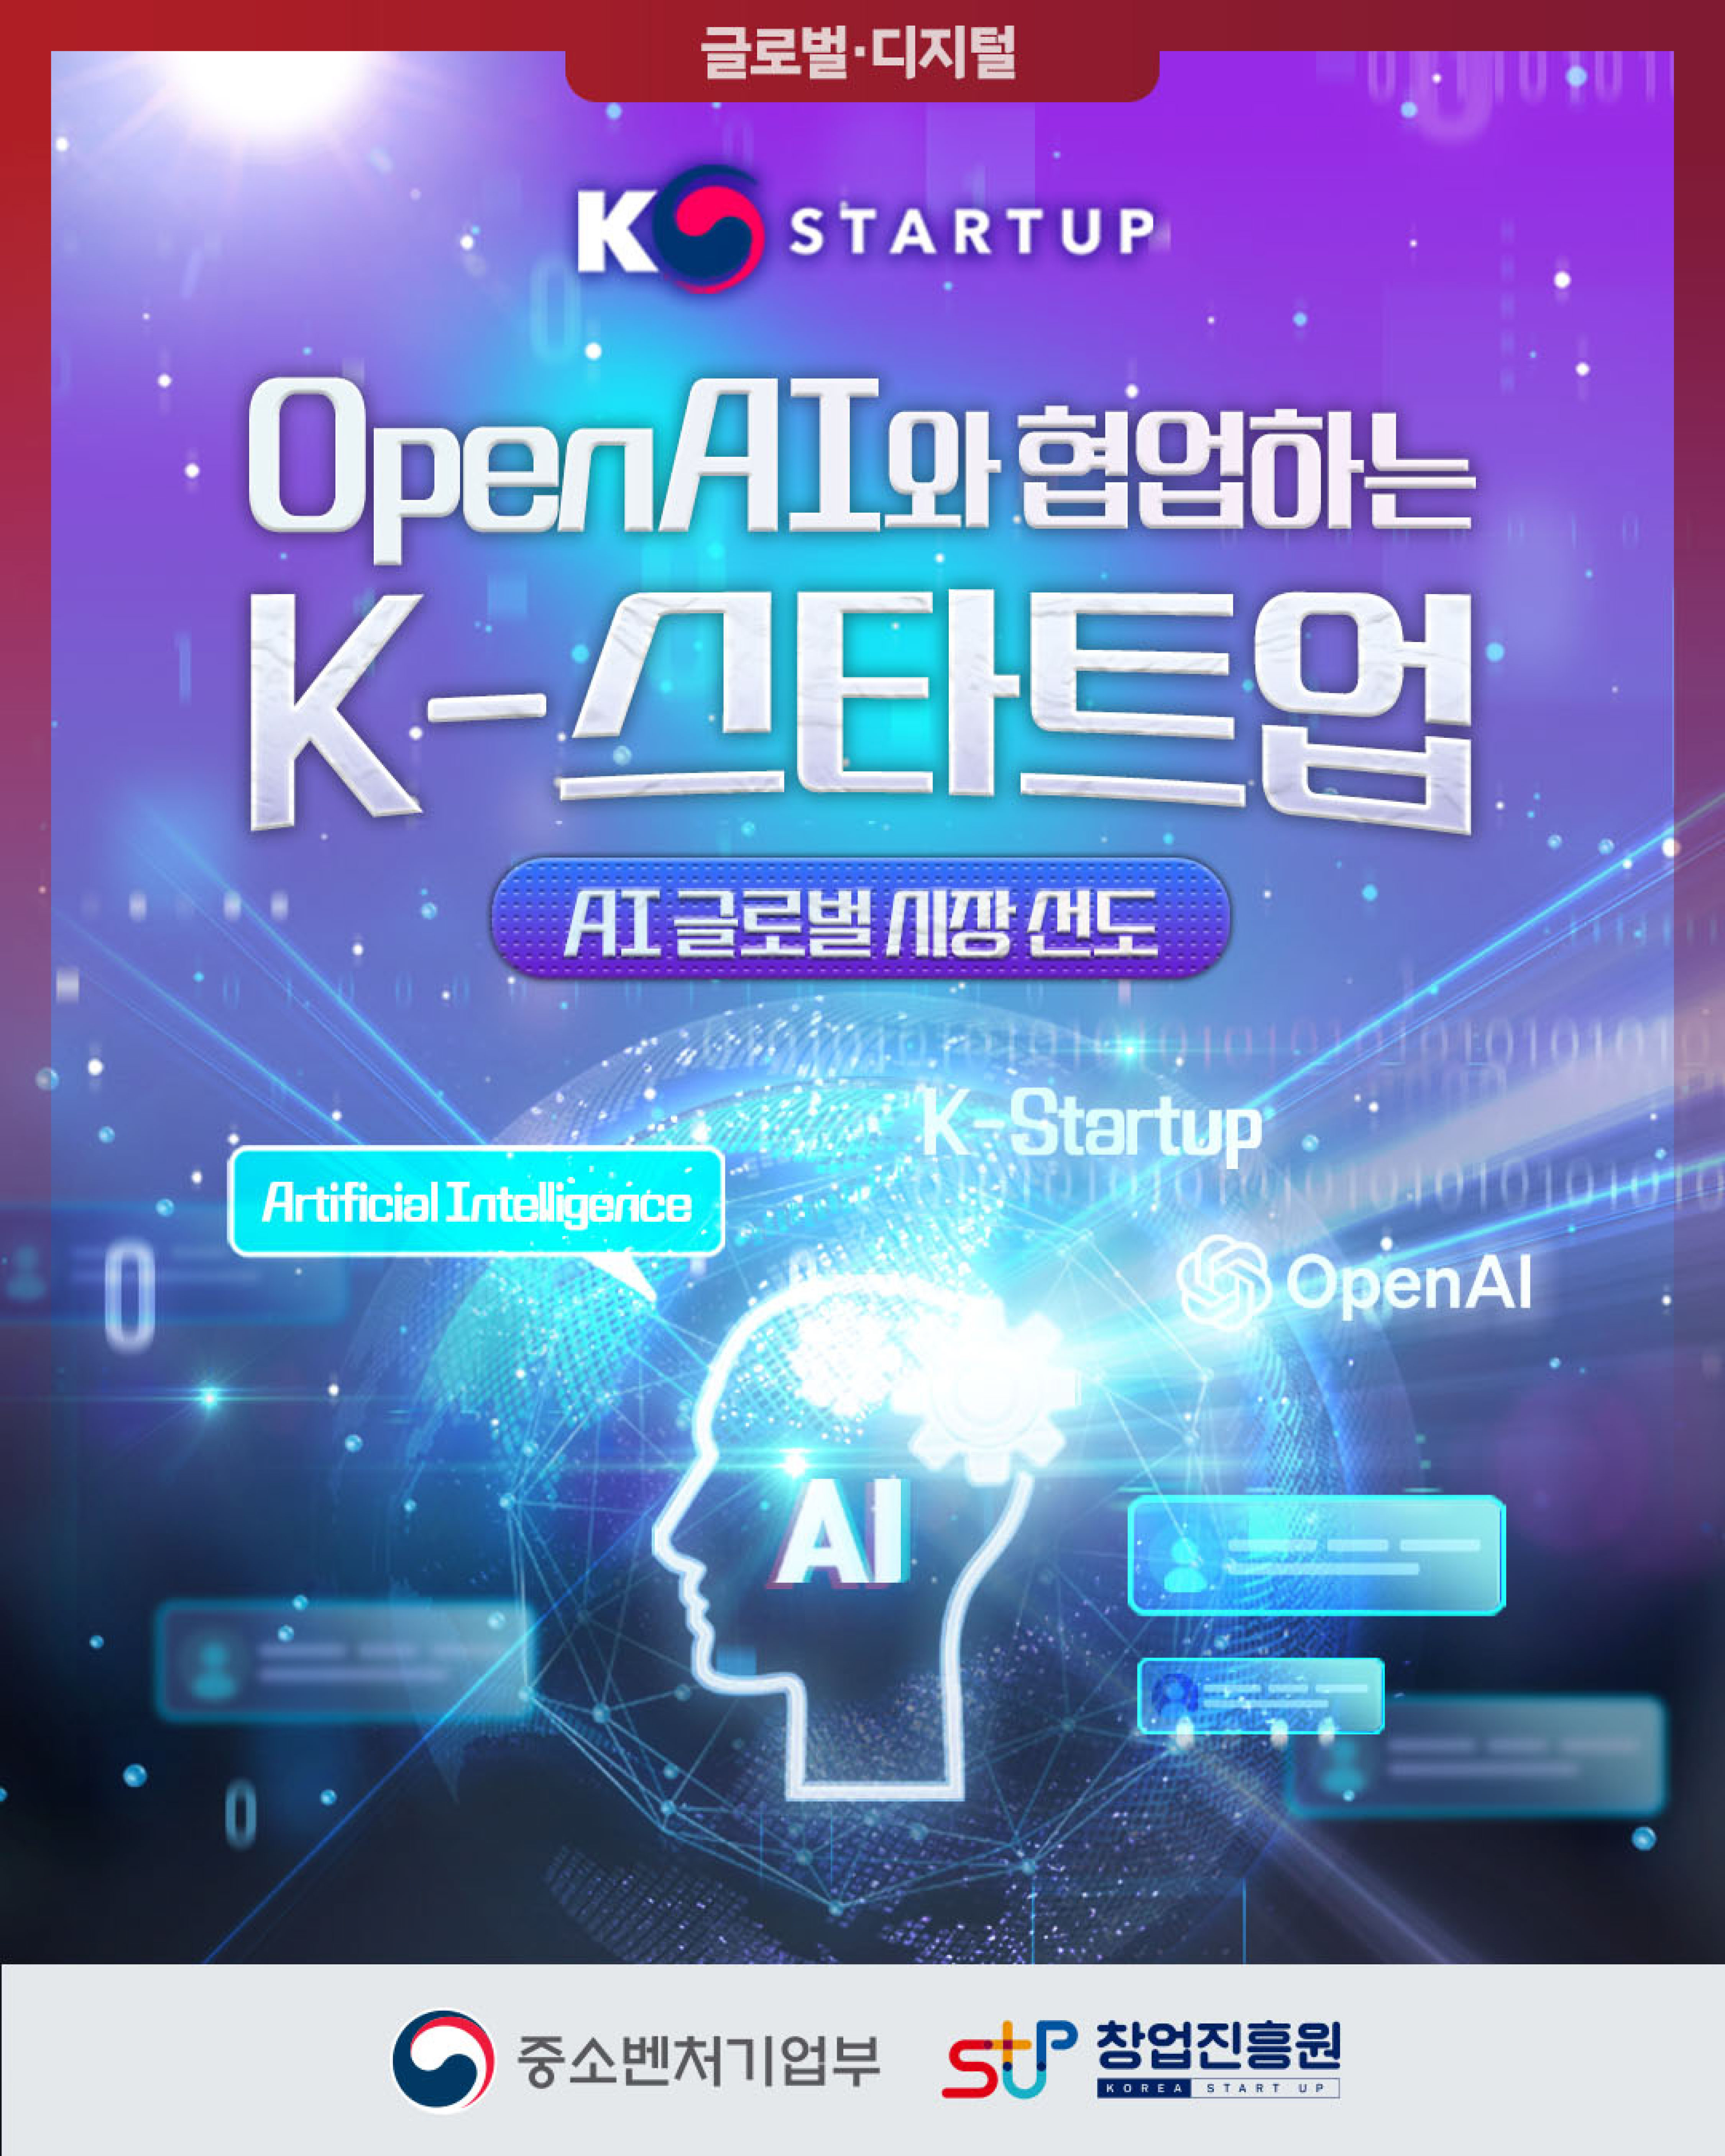 K Startup
Open AI와 협업하는 K 스타트업
AI 글로벌 시장 선도
중소벤처기업부 창업진흥원